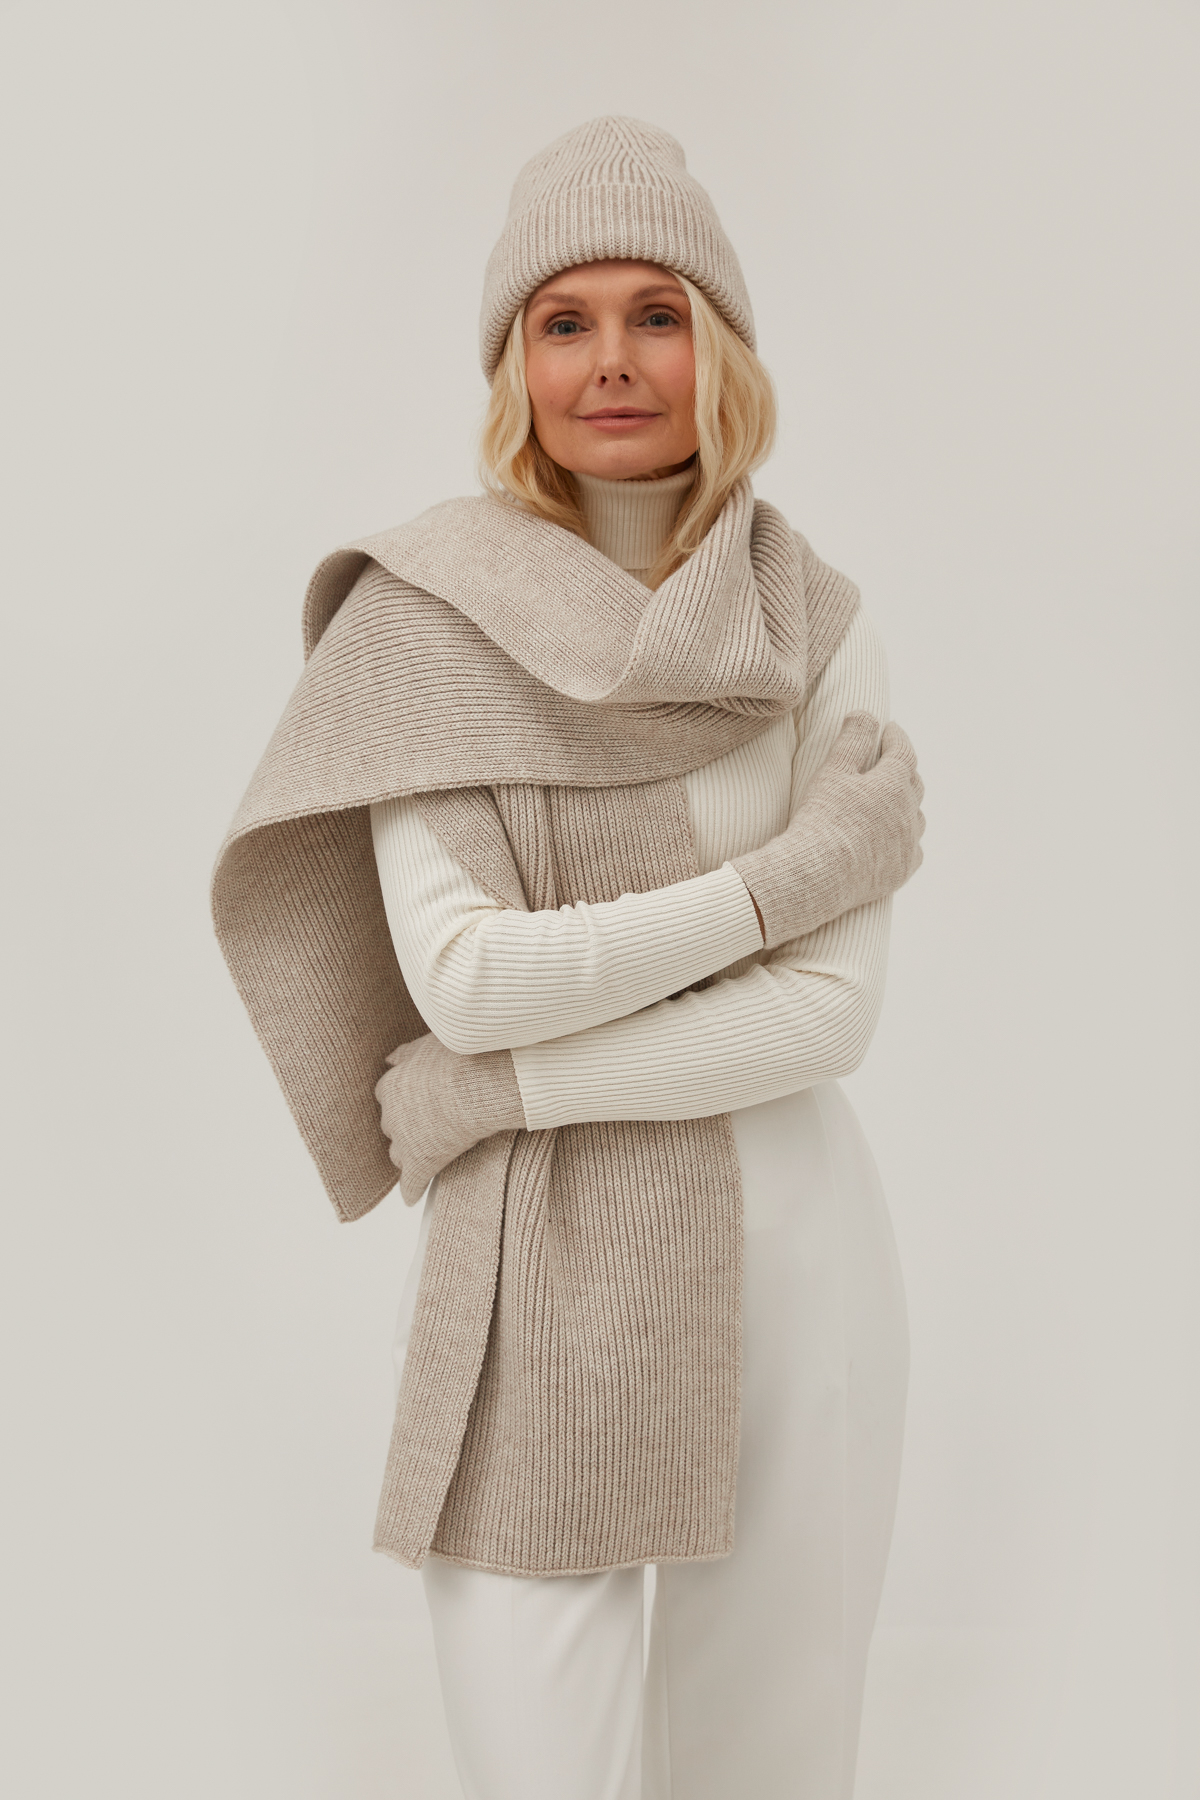 Knitted woolen light beige scarf, photo 3